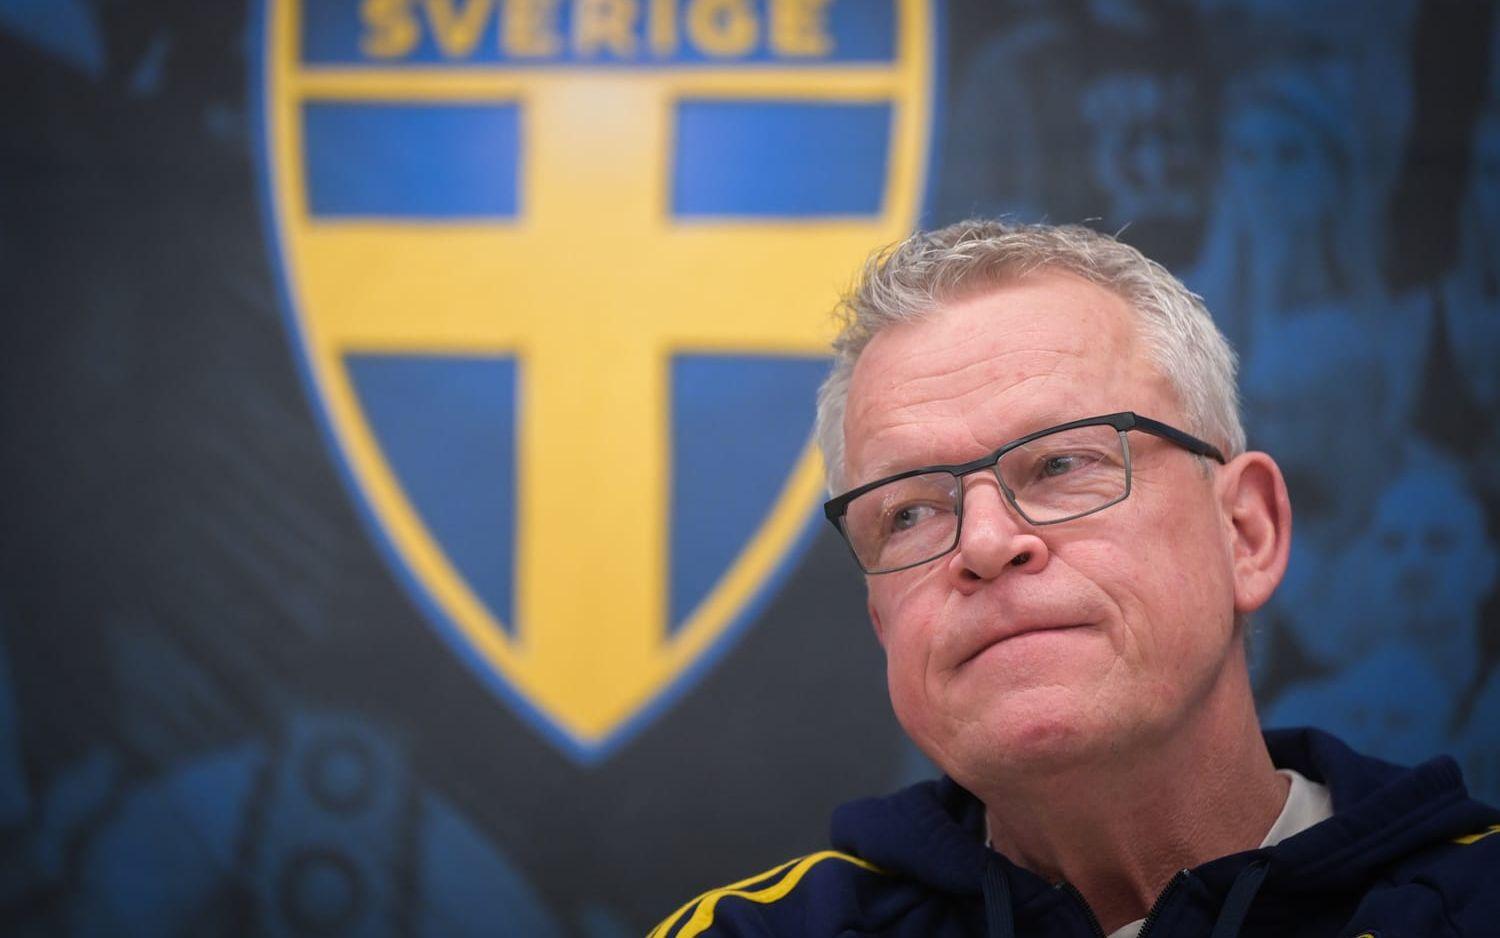 Sveriges förbundskapten Janne Andersson.